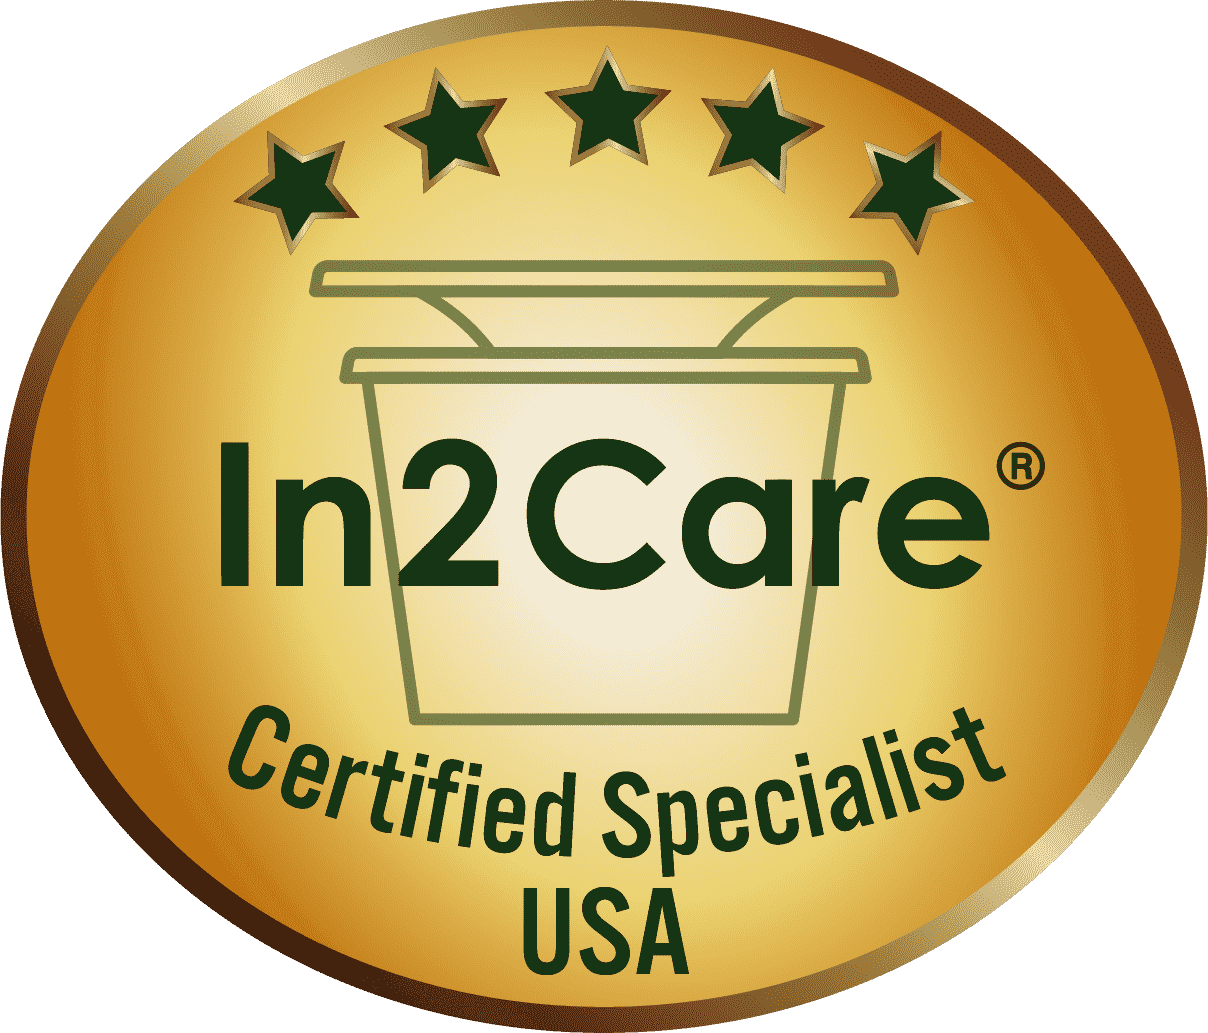 In 2Care Certified Specialist Logo 